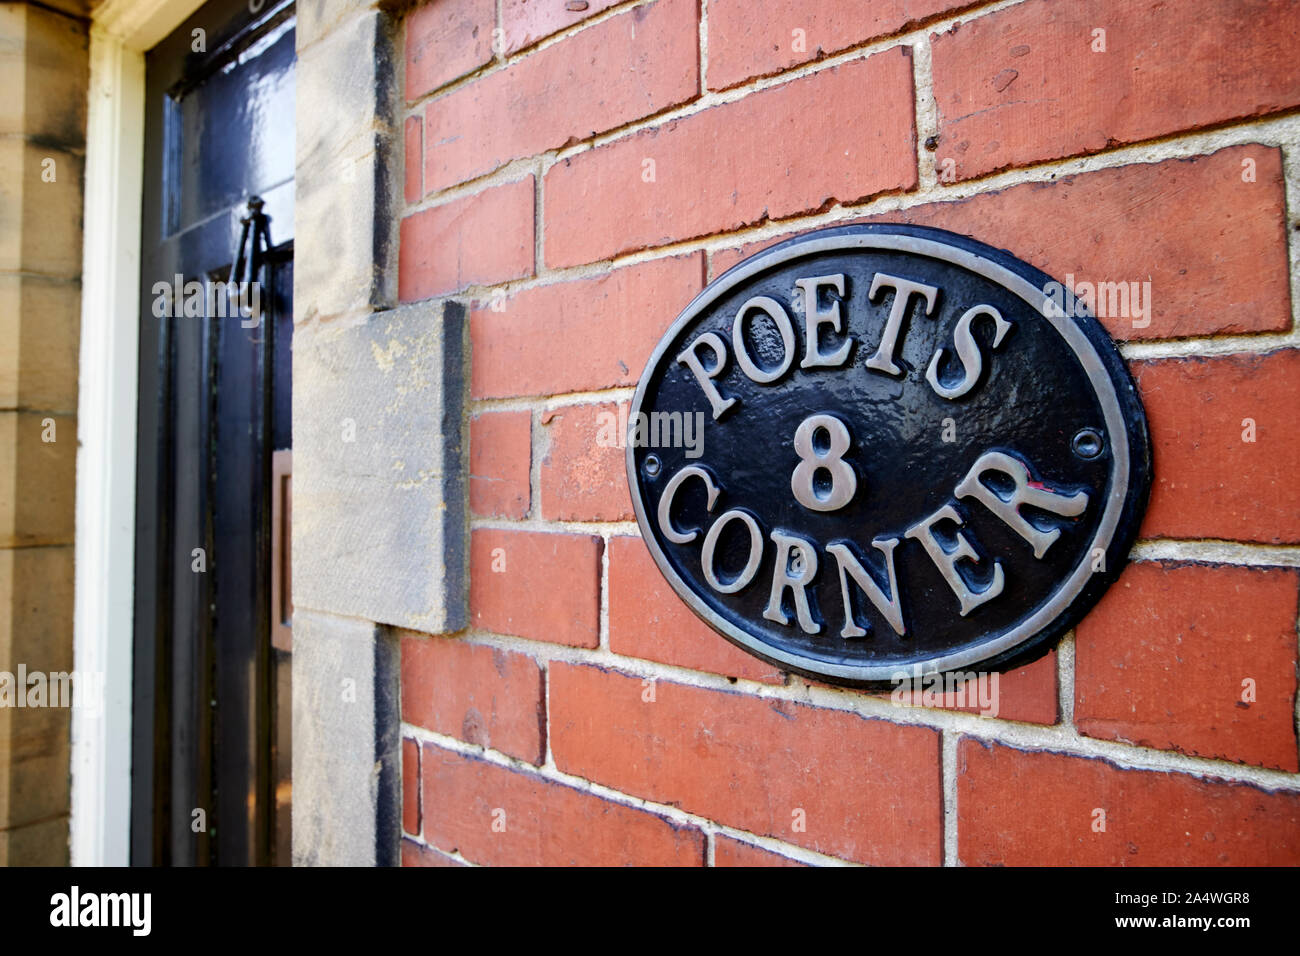 sign on a house 8 poets corner Port Sunlight England UK Stock Photo